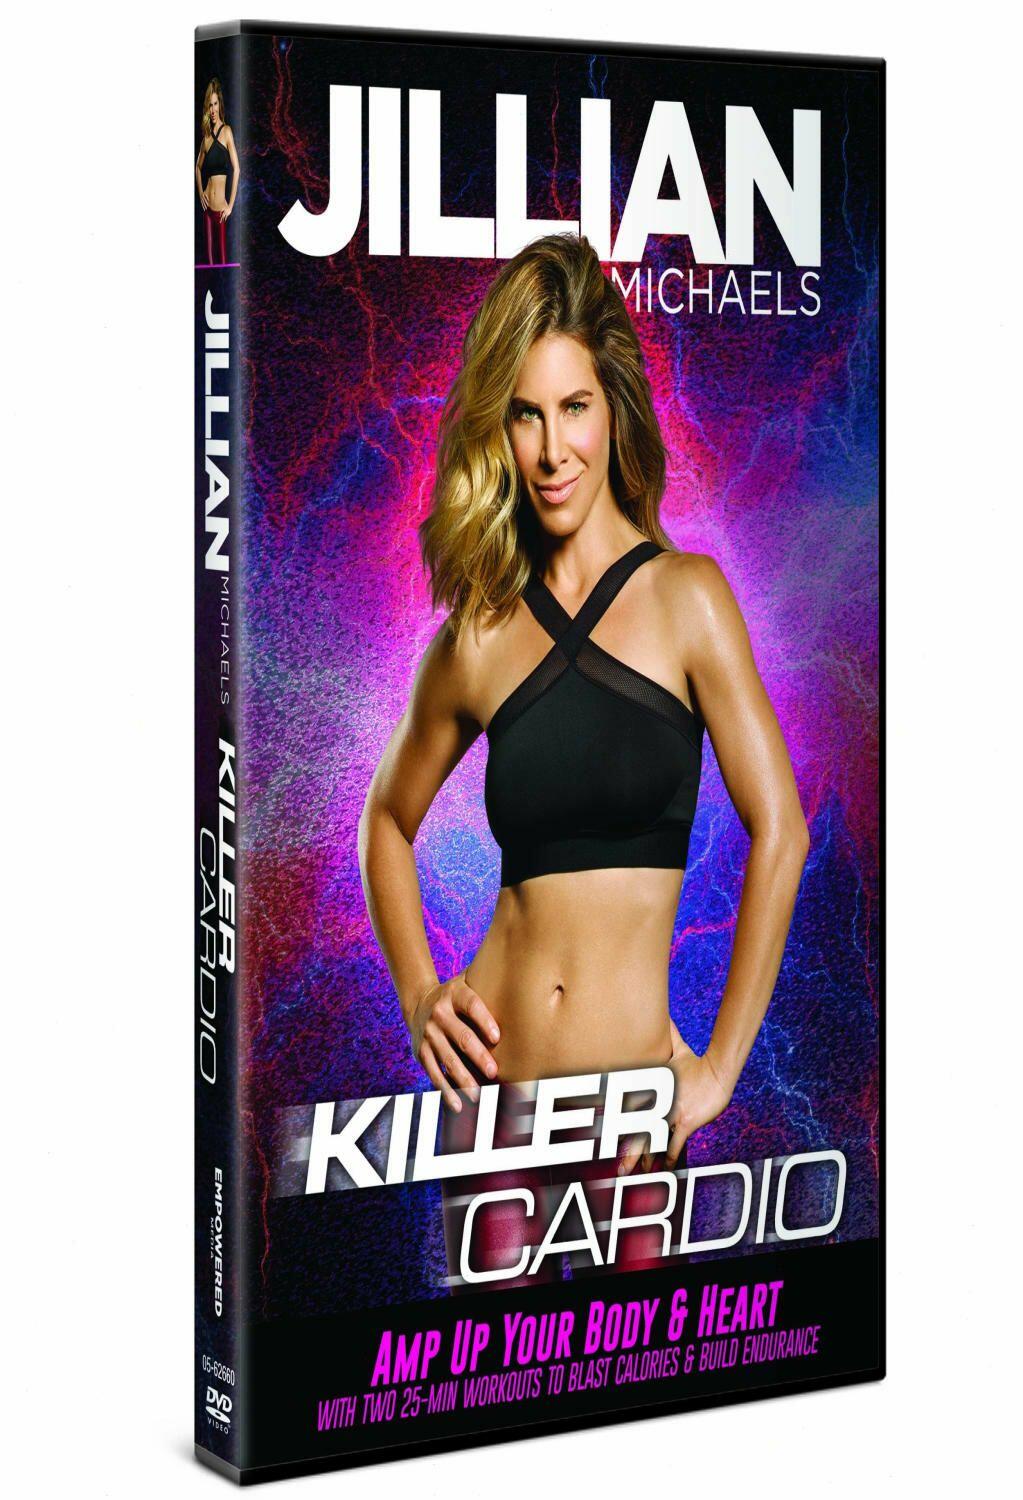 Jillian Michaels Killer Cardio (DVD) on MovieShack